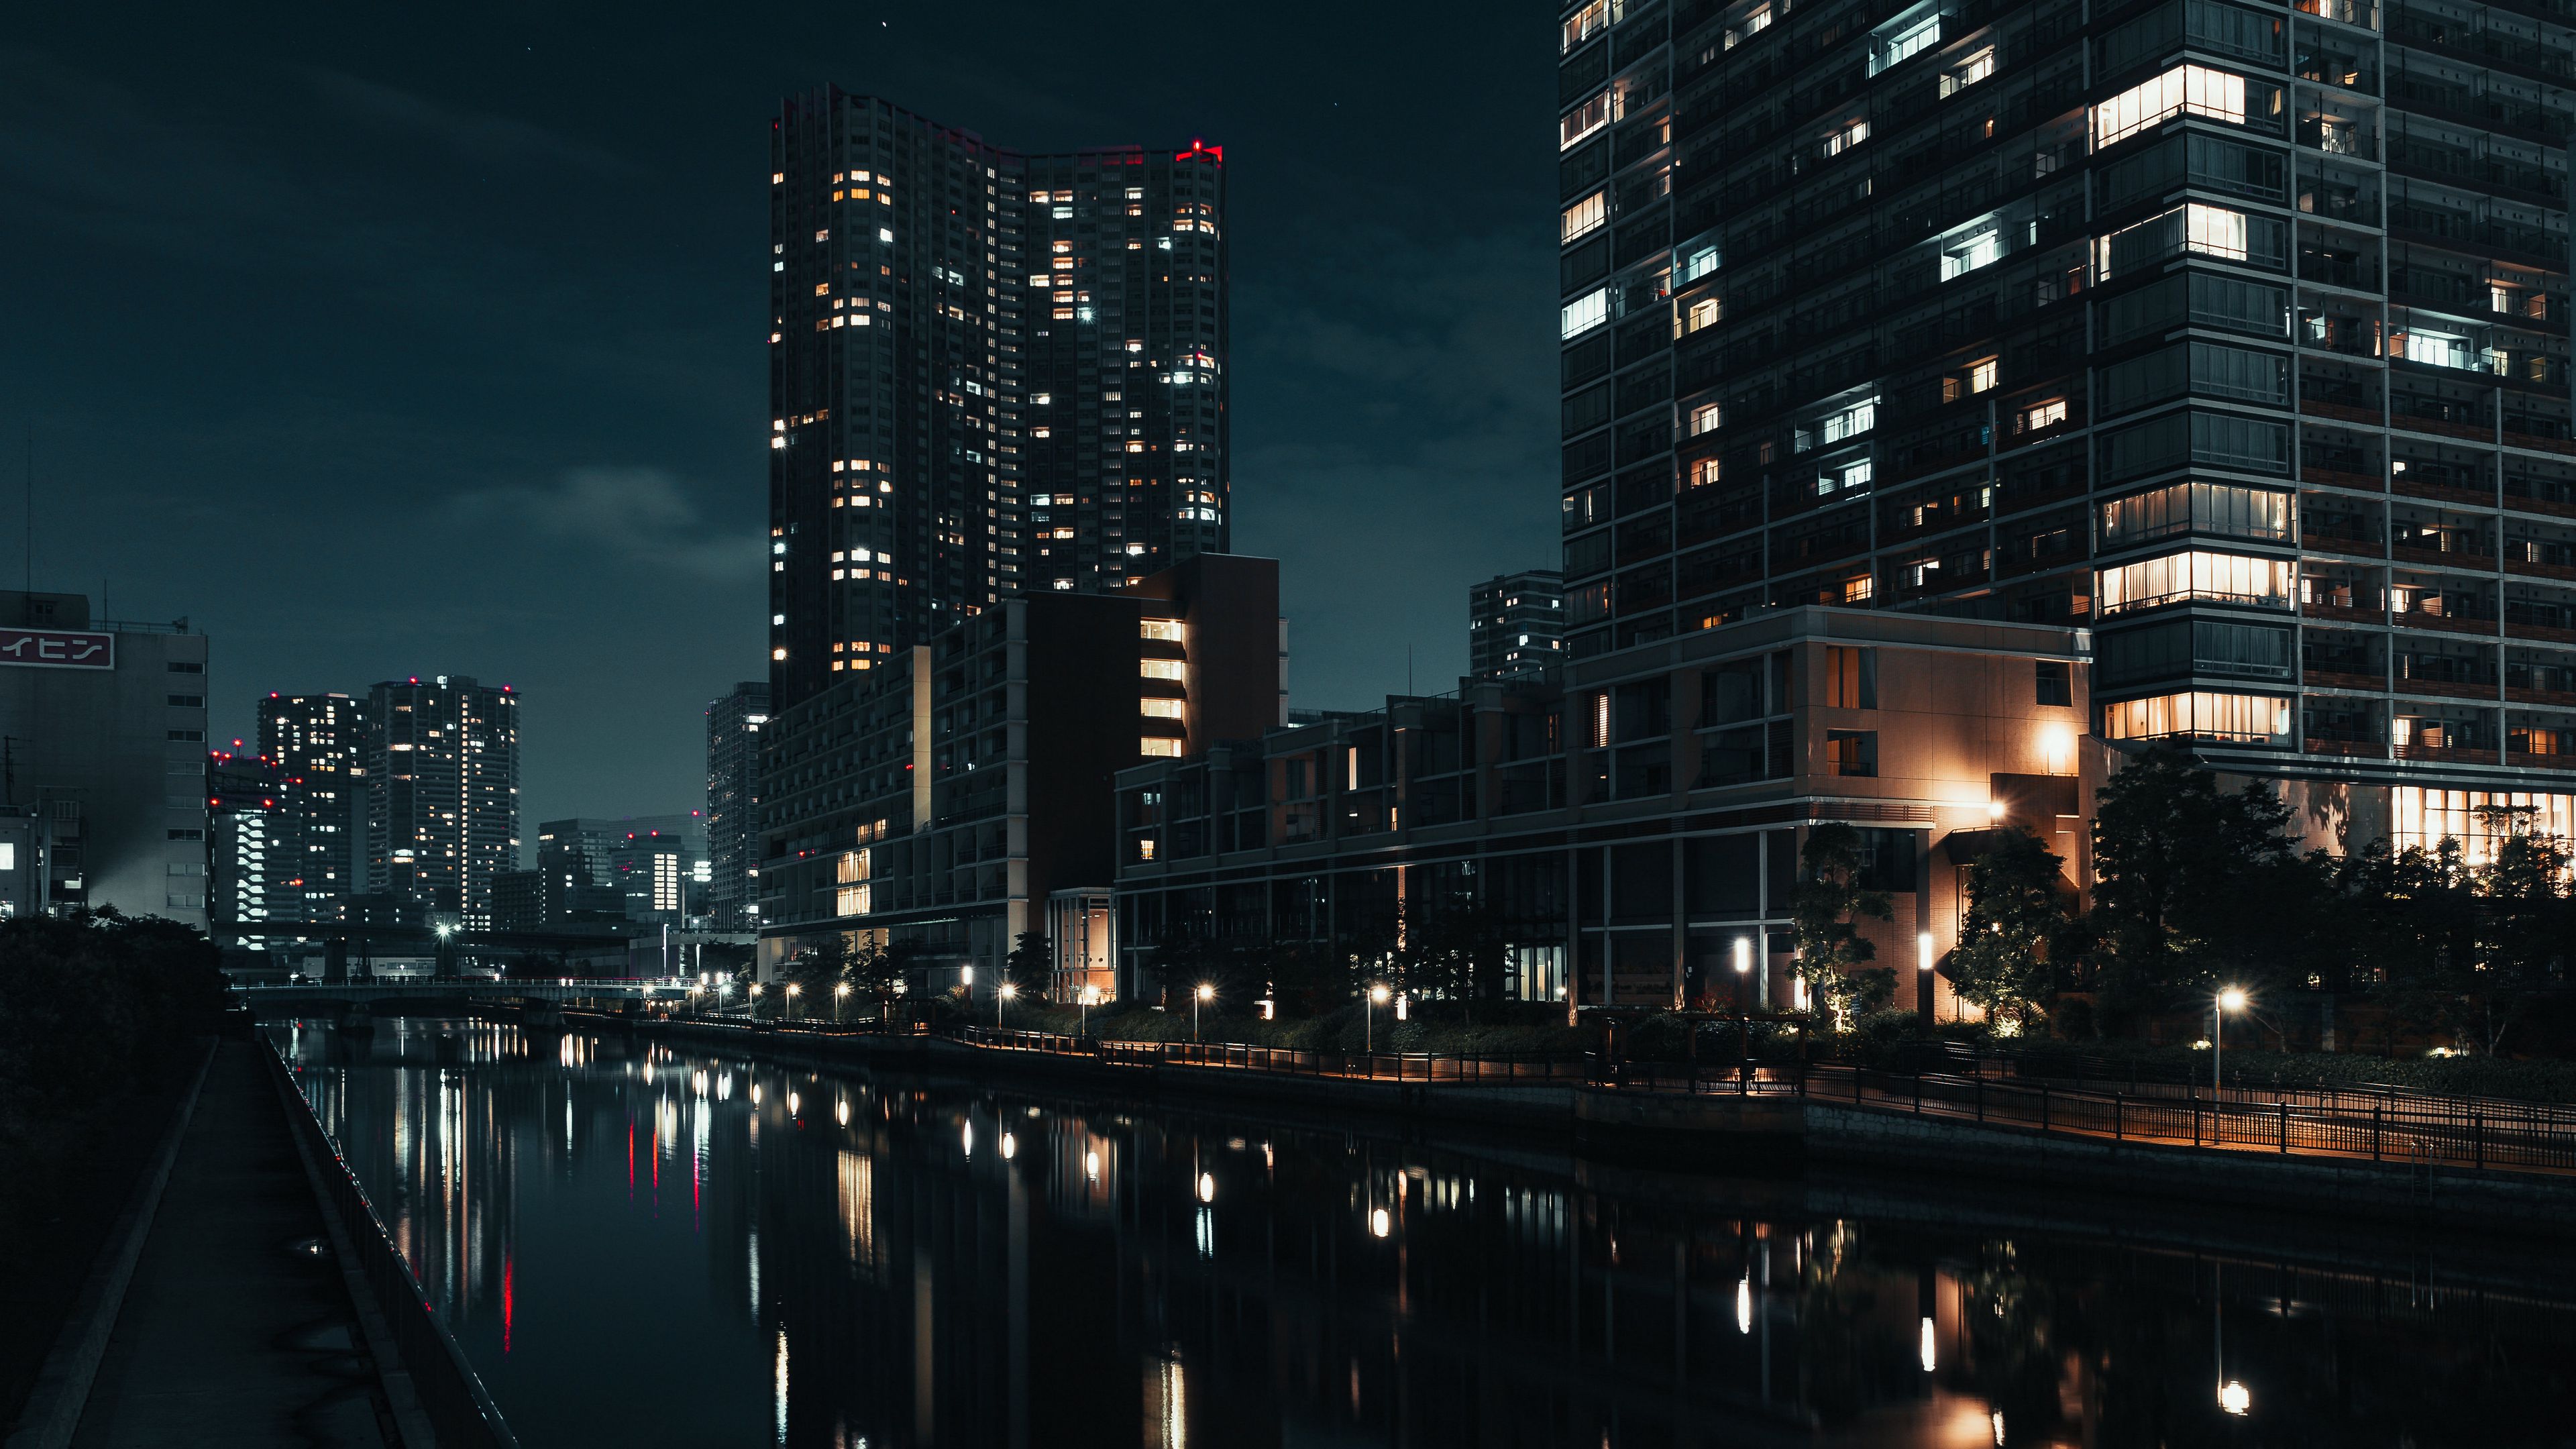 Download wallpaper 3840x2160 buildings, night city, river, tokyo 4k uhd  16:9 hd background